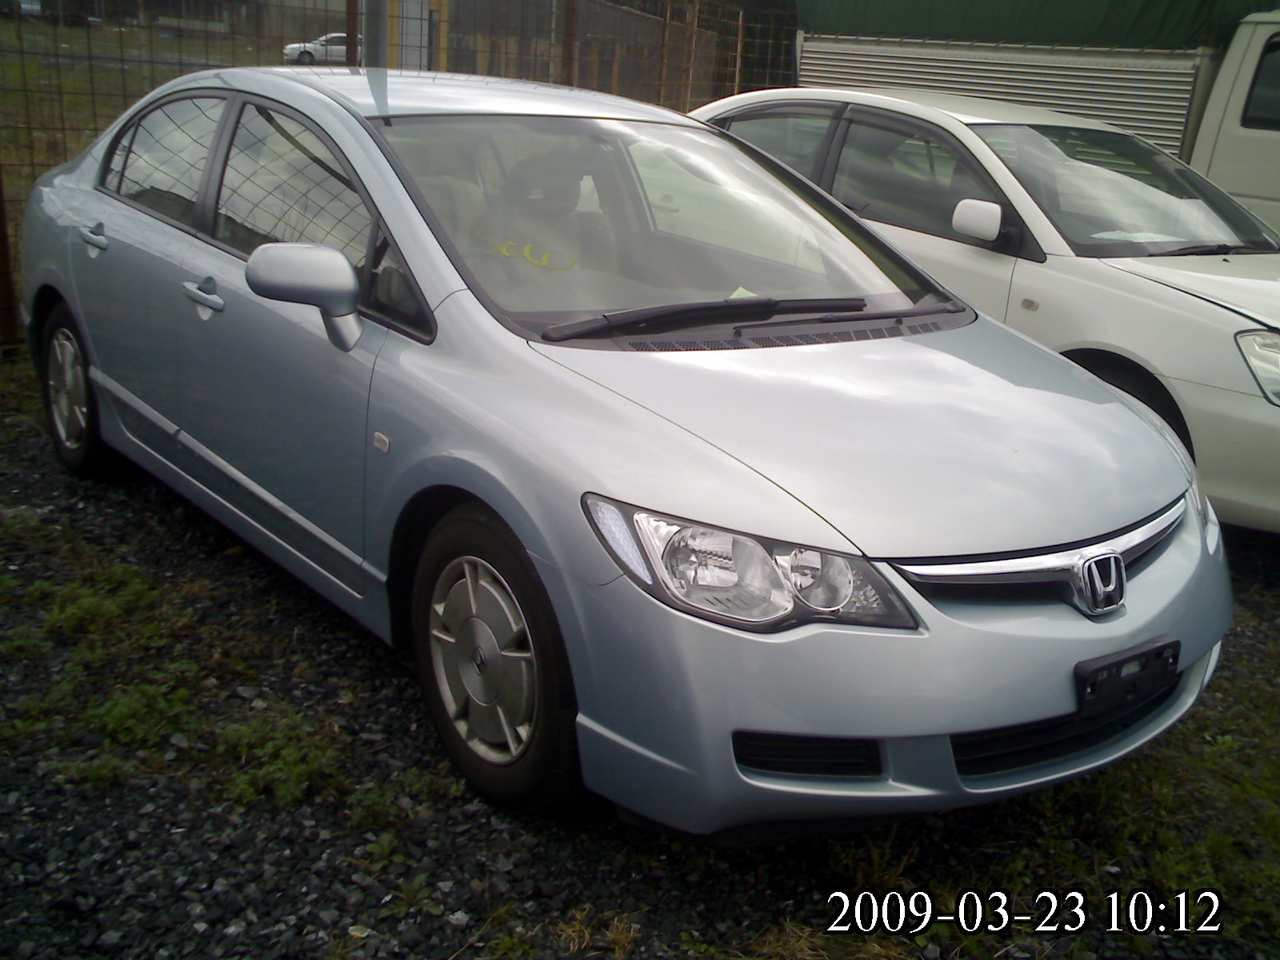 2005 Honda civic hybrid recall